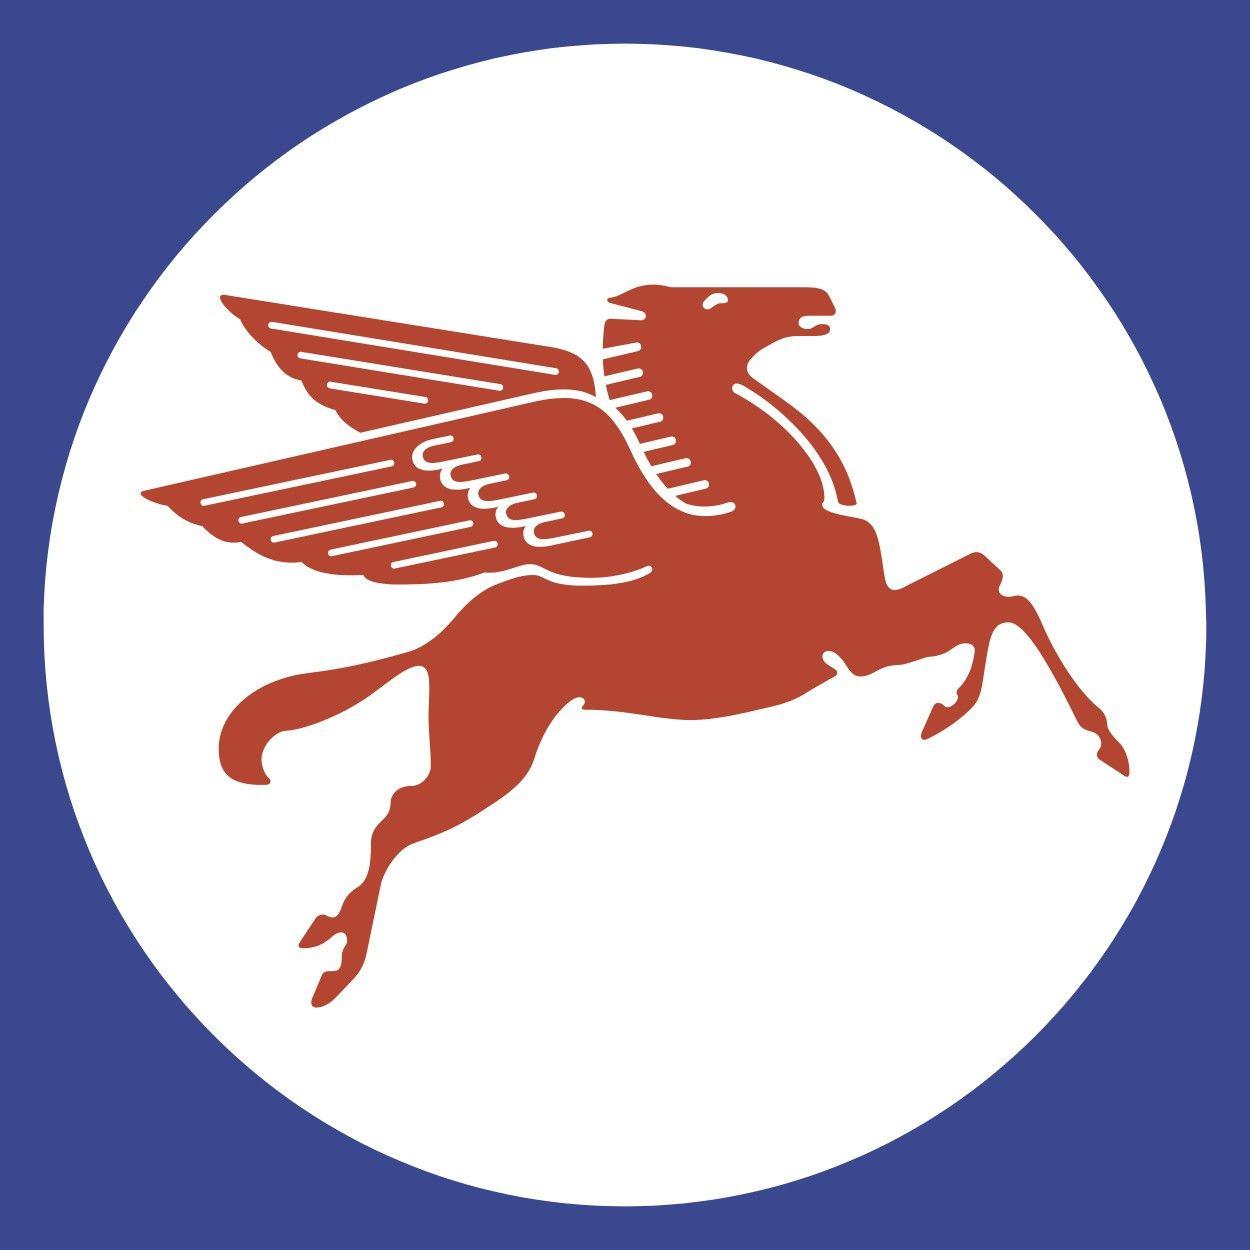 Mobil Horse Logo - Mobil Pegasus (or Flying Red Horse) logo (Originally part of Vaccum